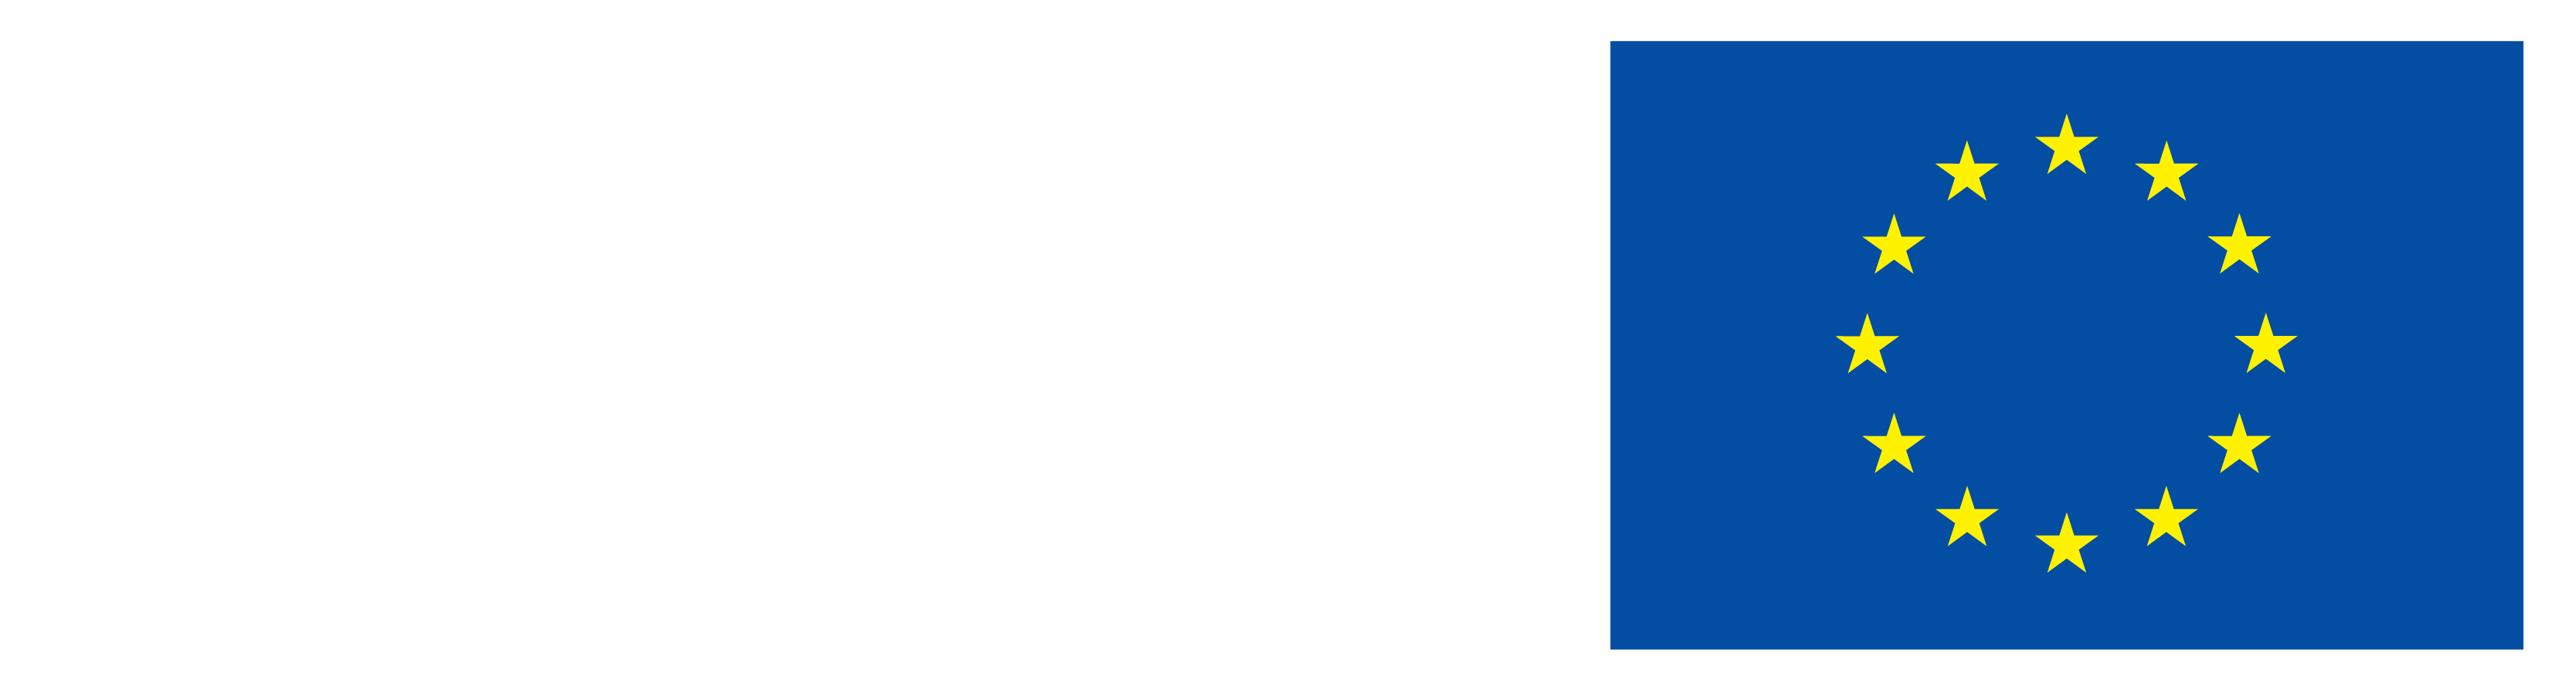 Funded by the EU logo AR